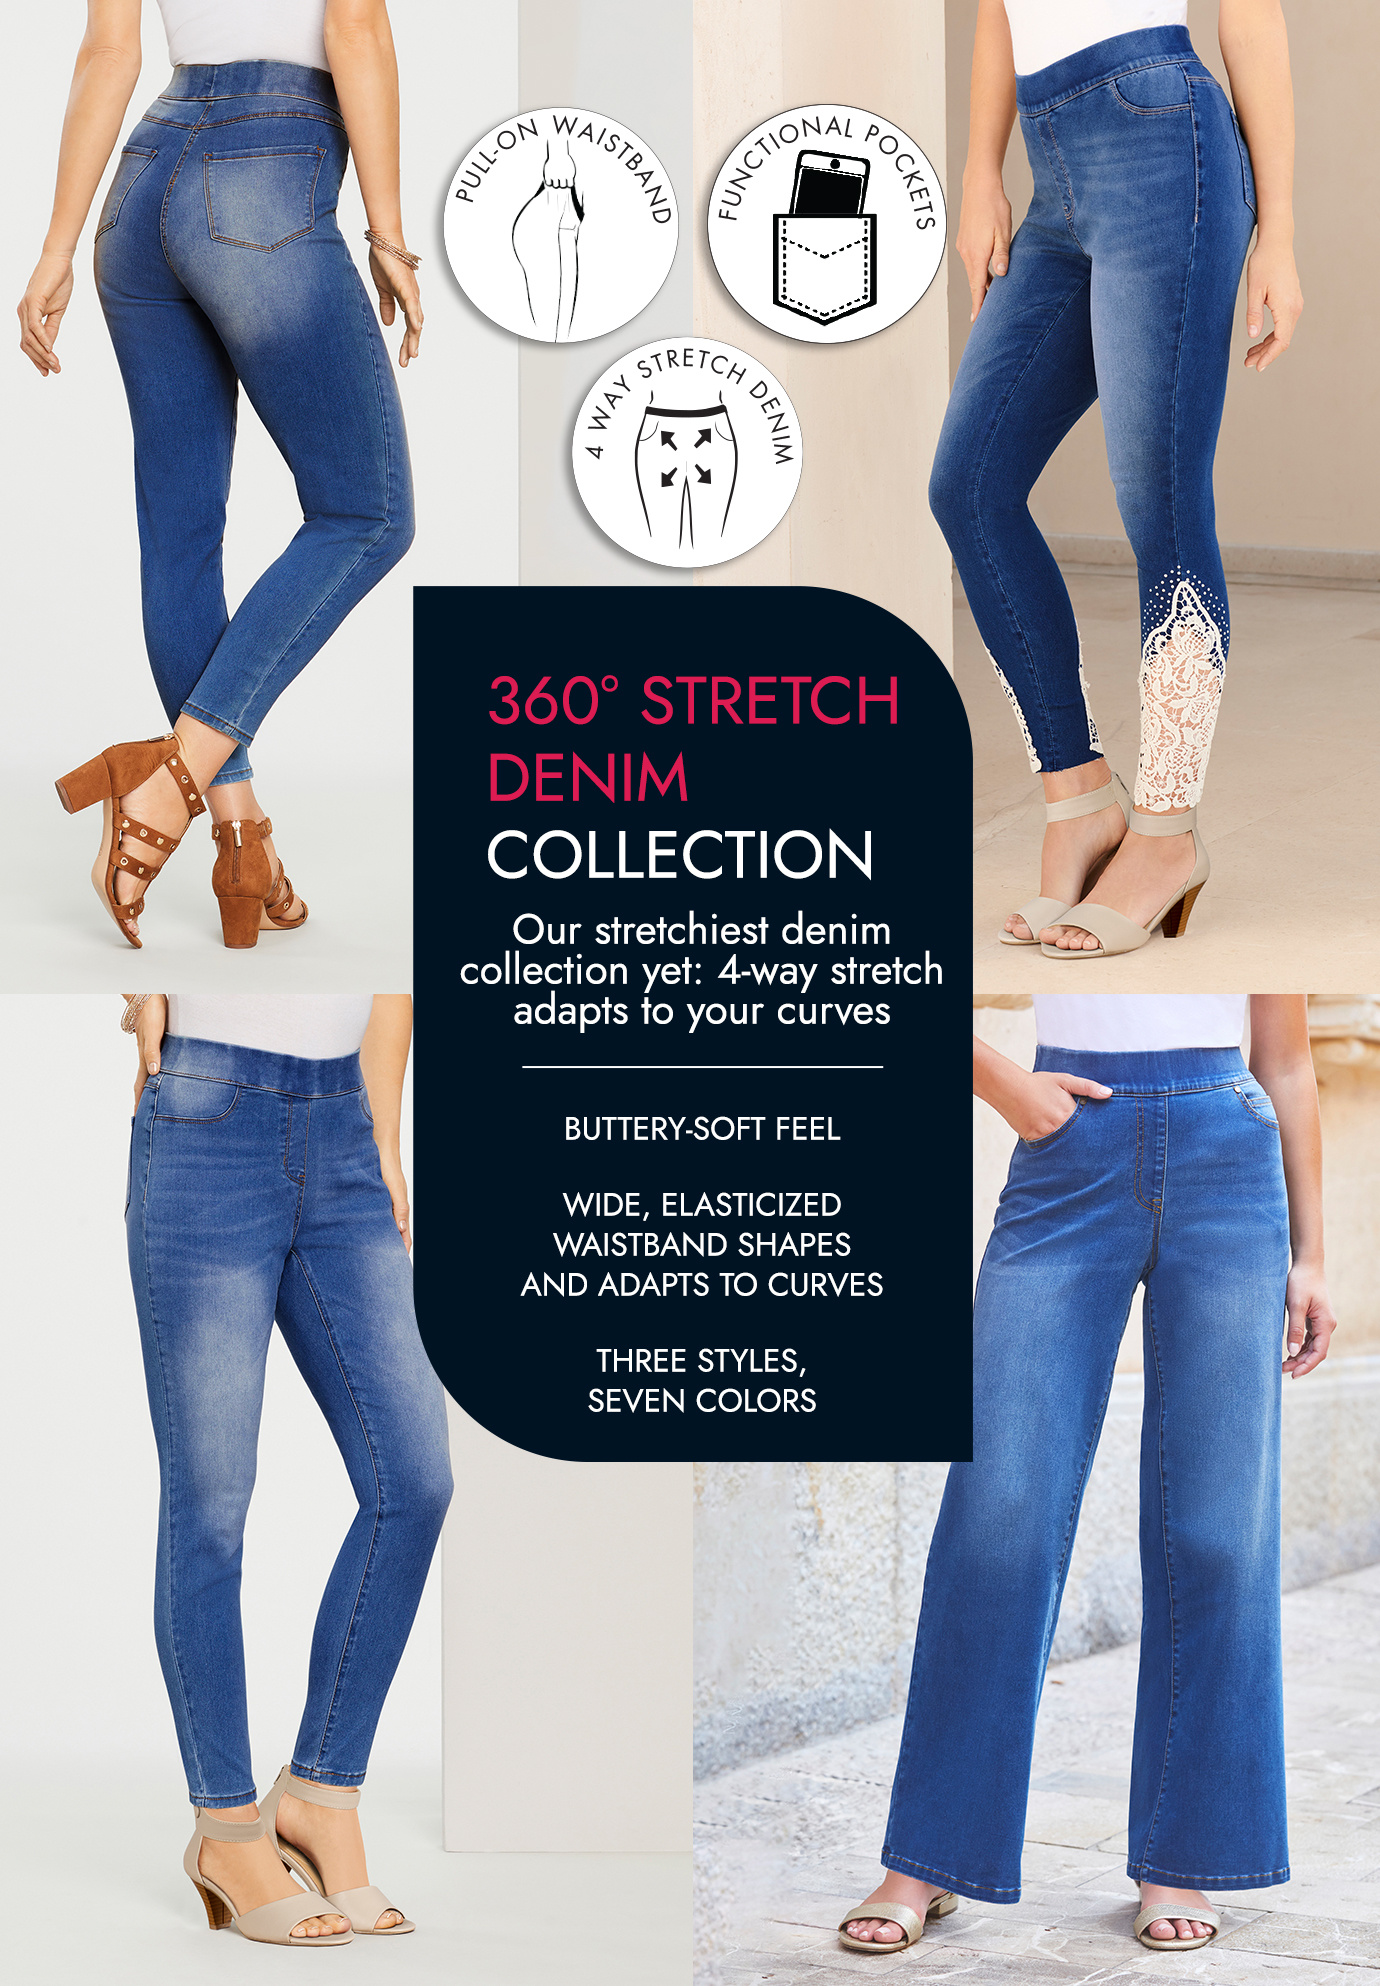 Roaman's Women's Plus Size 360° Stretch Jegging Pull On Jeans Denim Legging - image 5 of 6